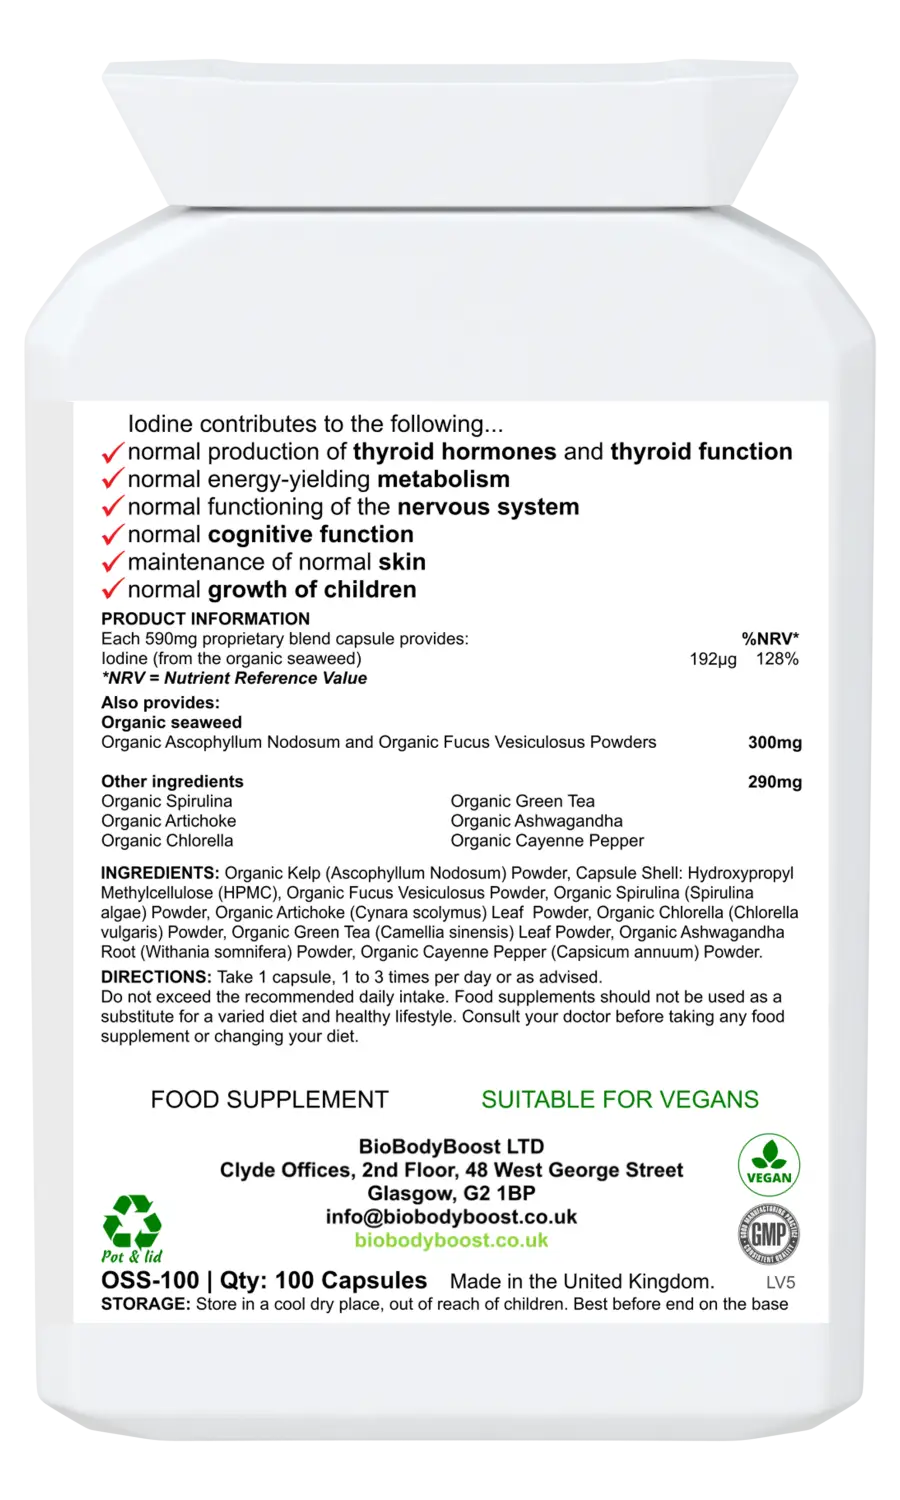 Iobio organic seaweed herbal combination - vitamins & supplements